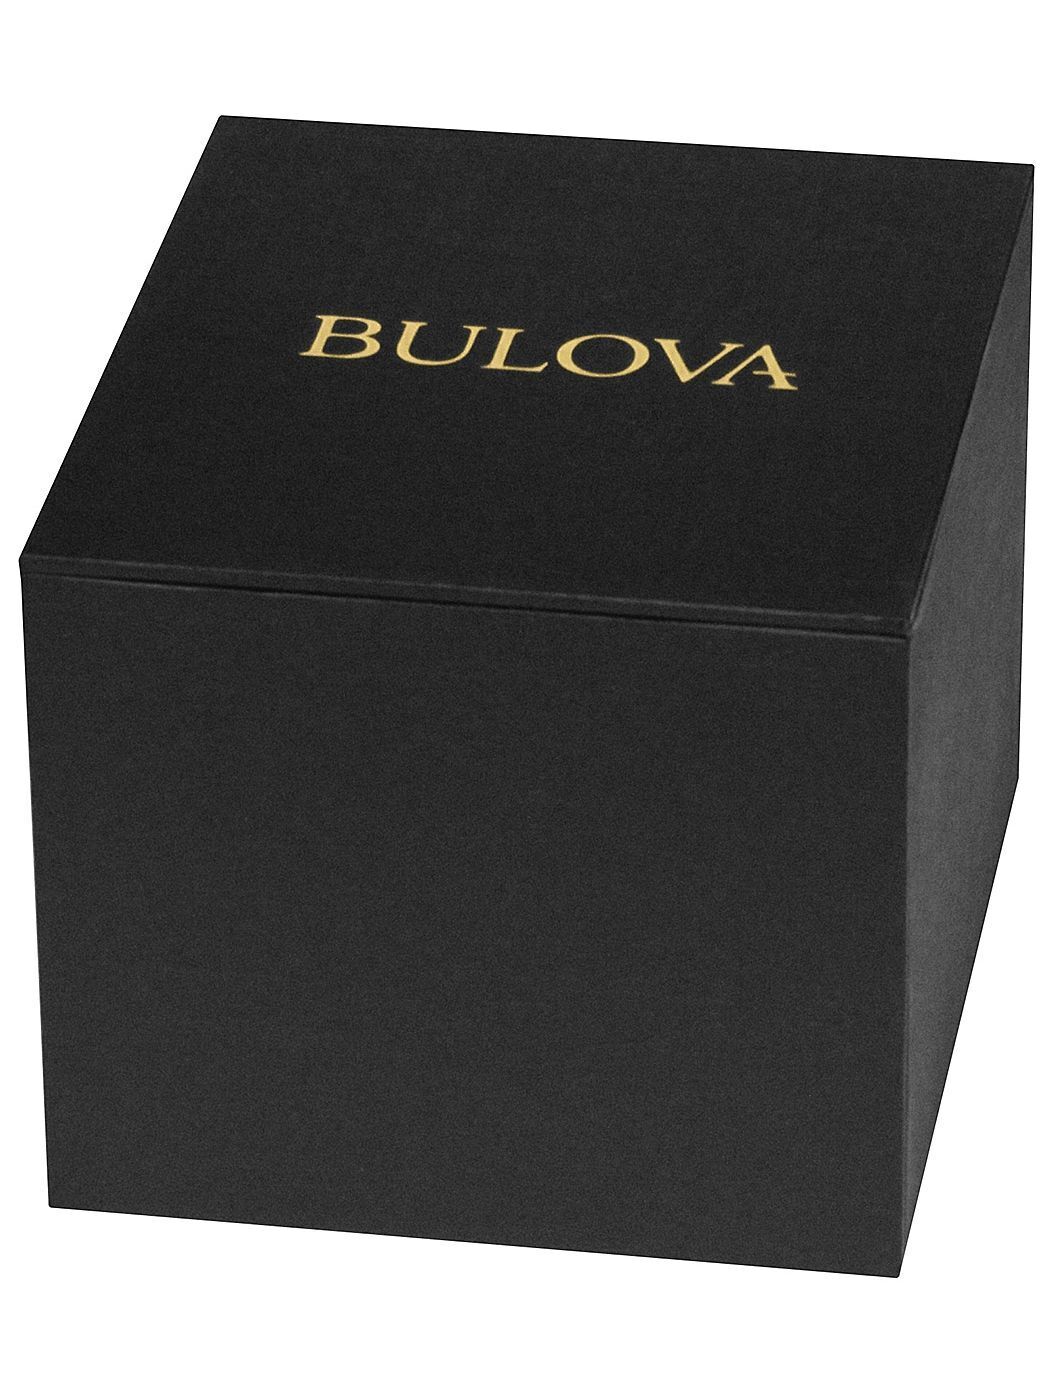 Bulova+96A276+Aerojet+Automatic+3+ATM+*+* for sale online | eBay